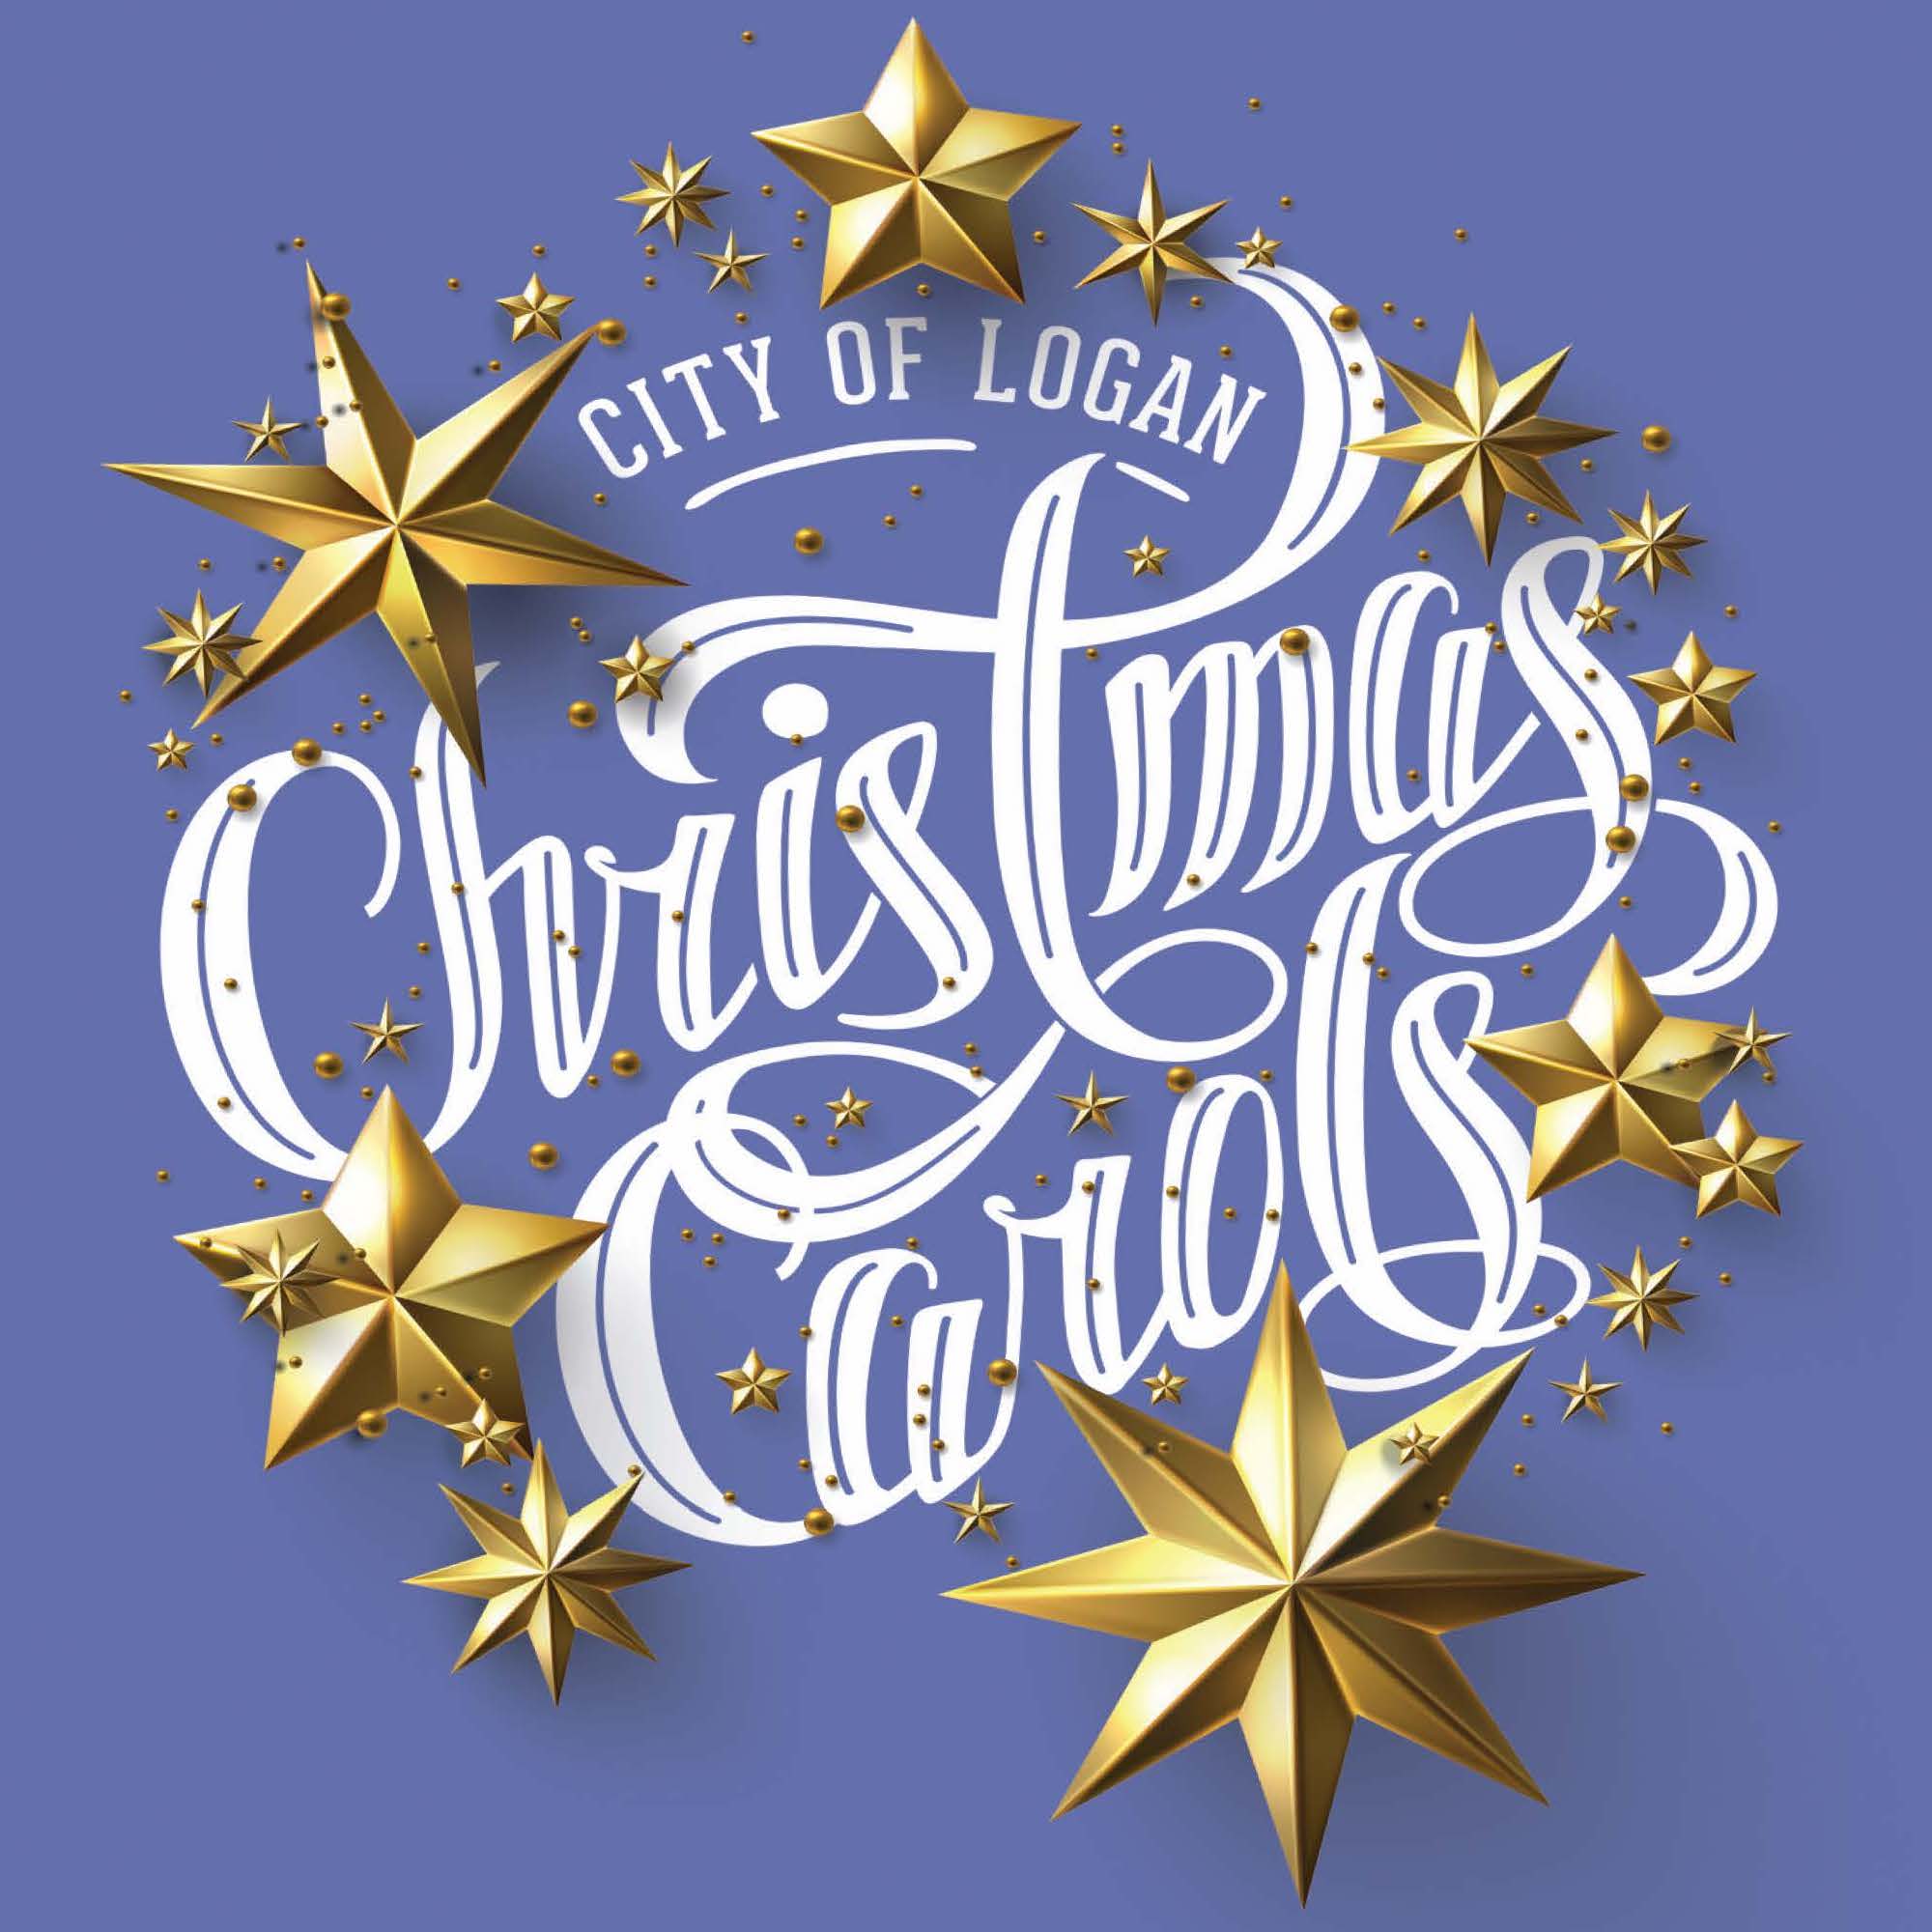 City of Logan Christmas Carols